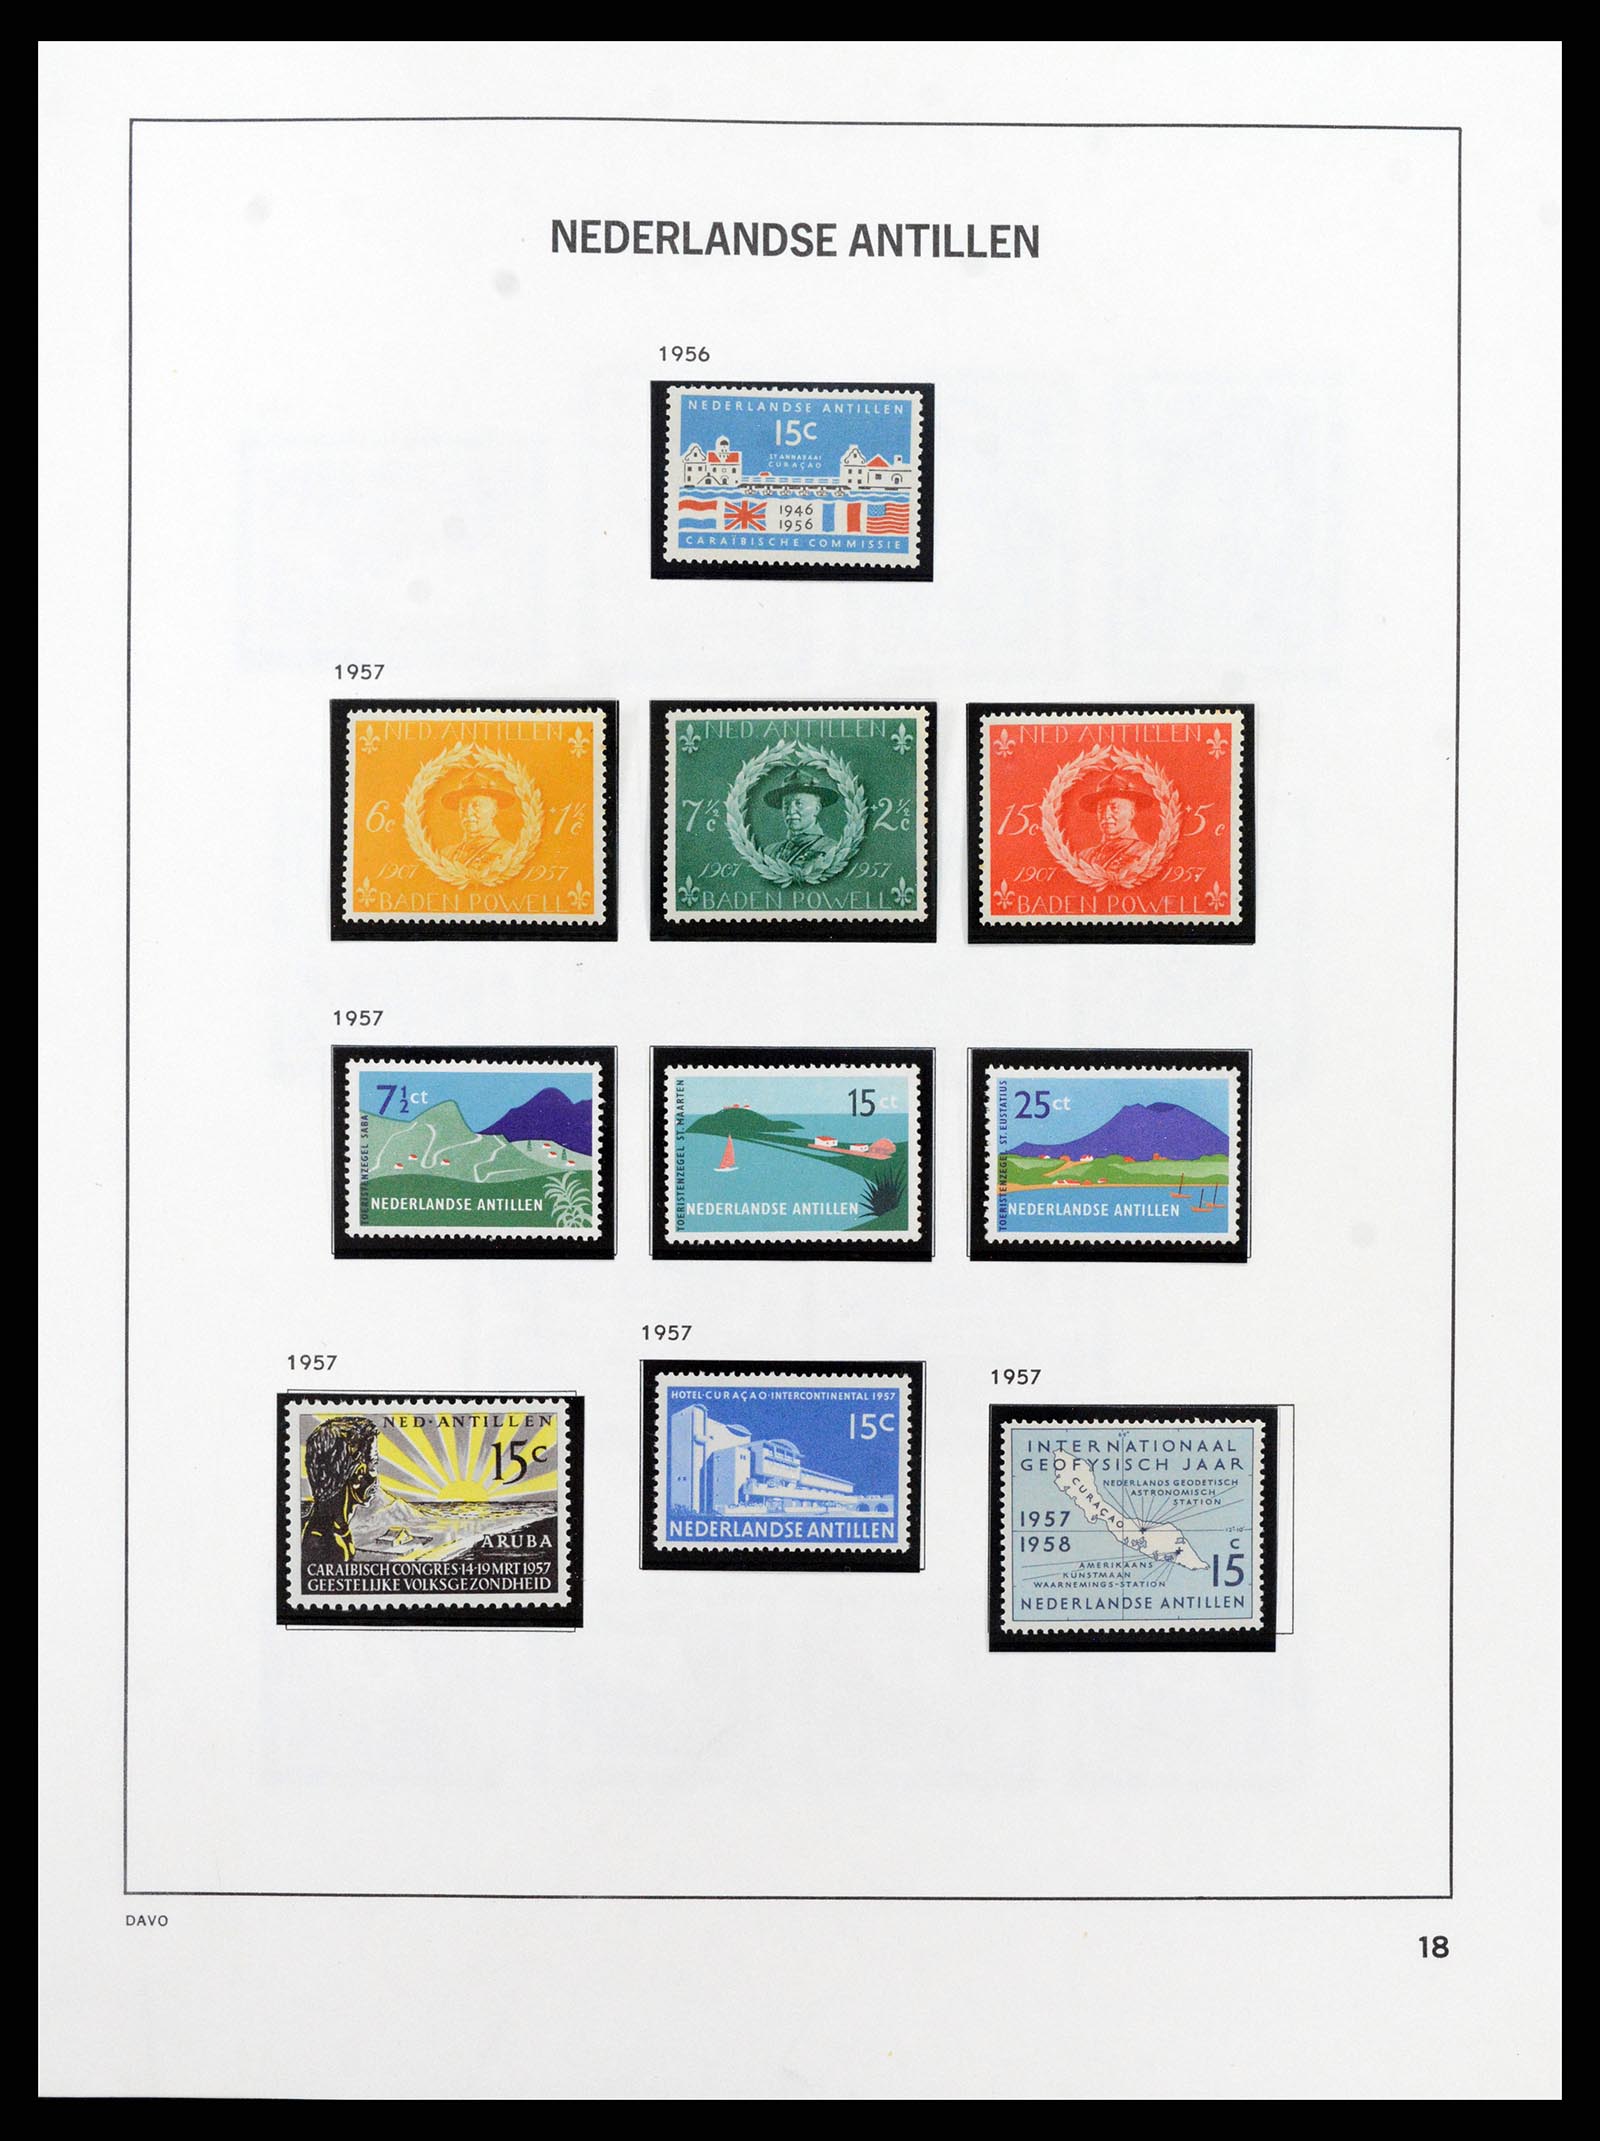 37682 007 - Stamp collection 37682 Netherlands Antilles.